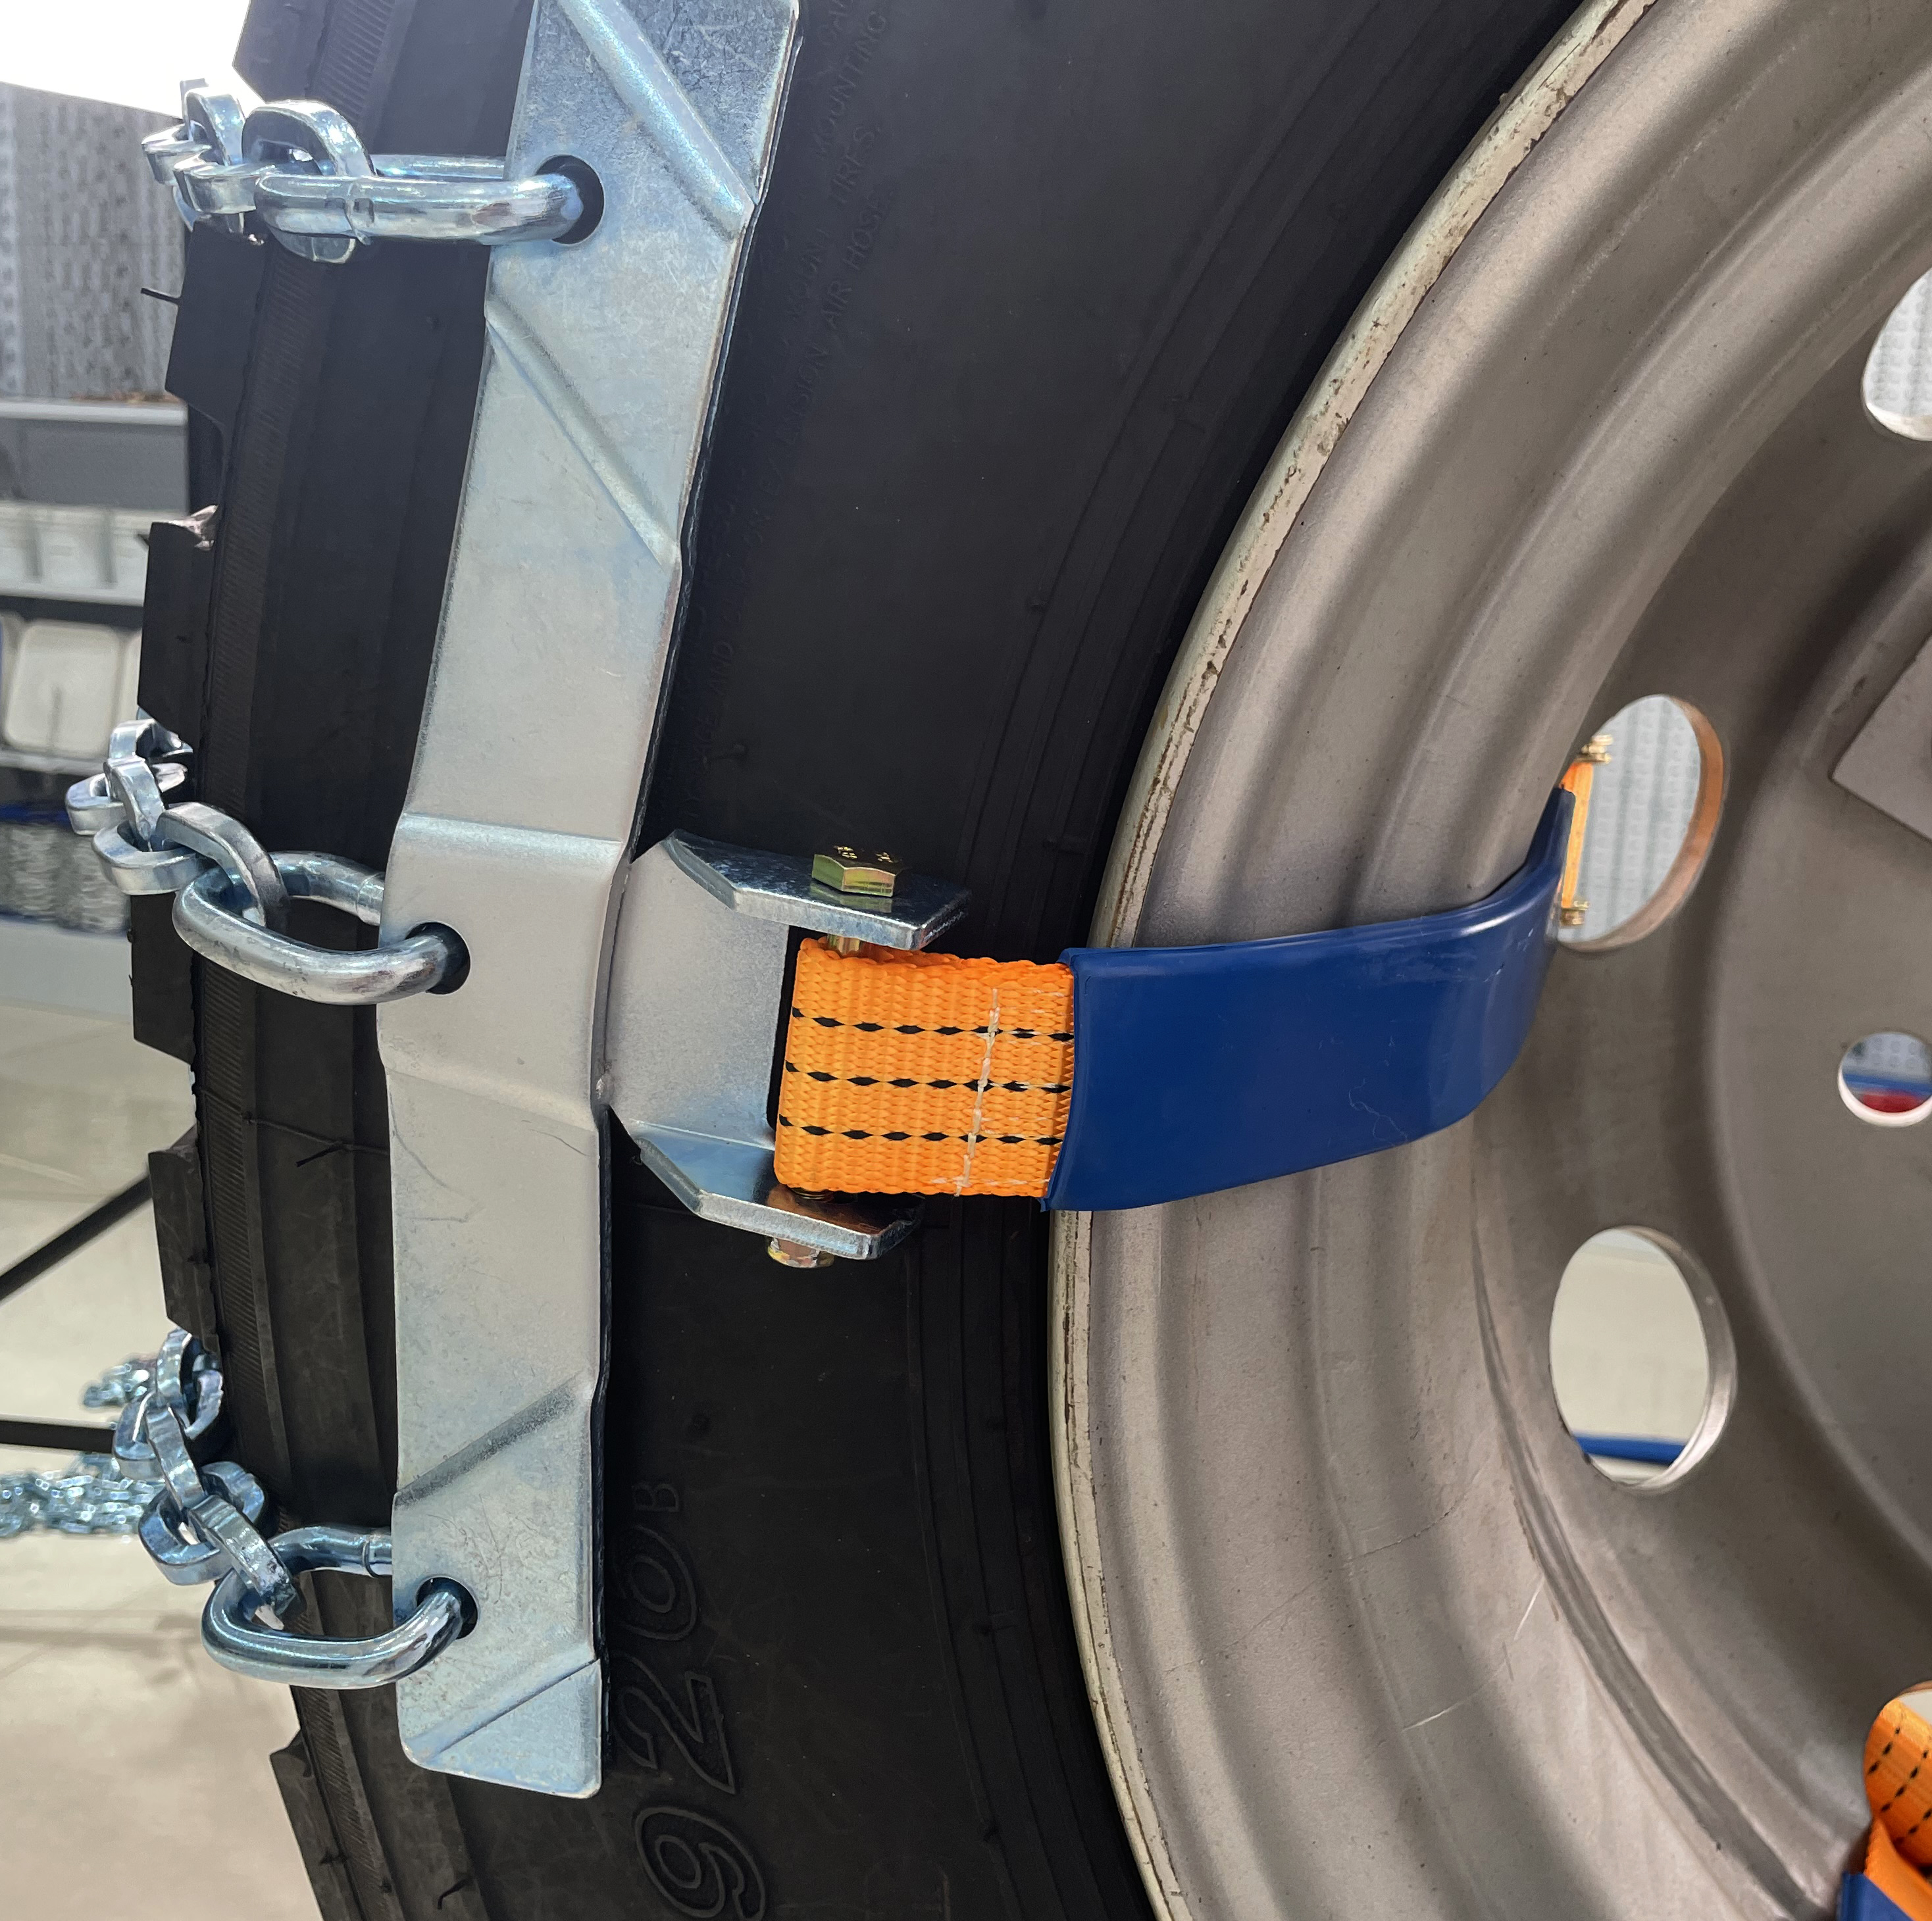 DN Ratchet Strap Truck Emergency Tire Chain/Snow Chain